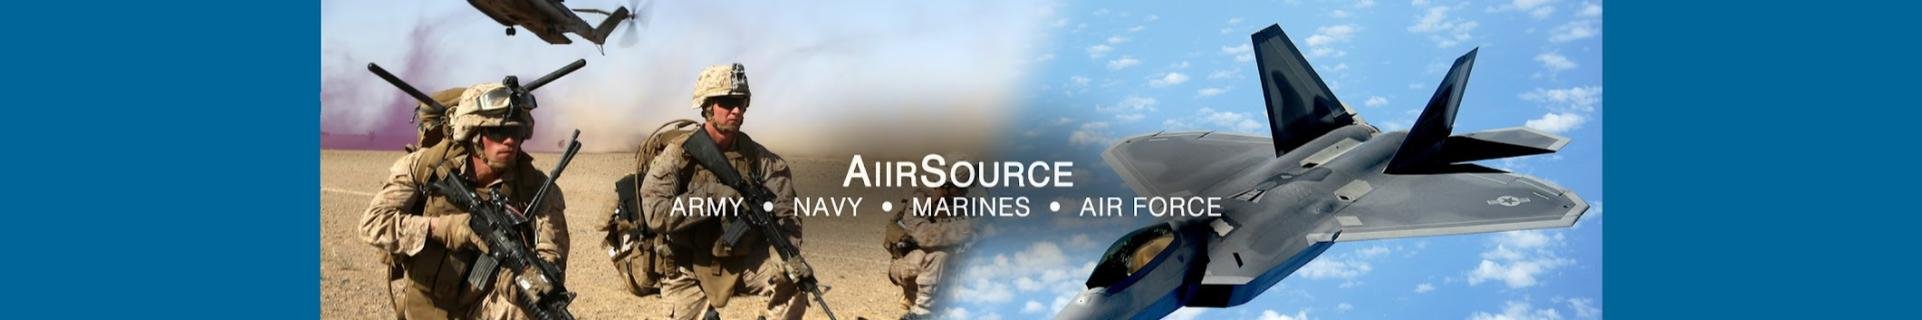 AiirSource Military